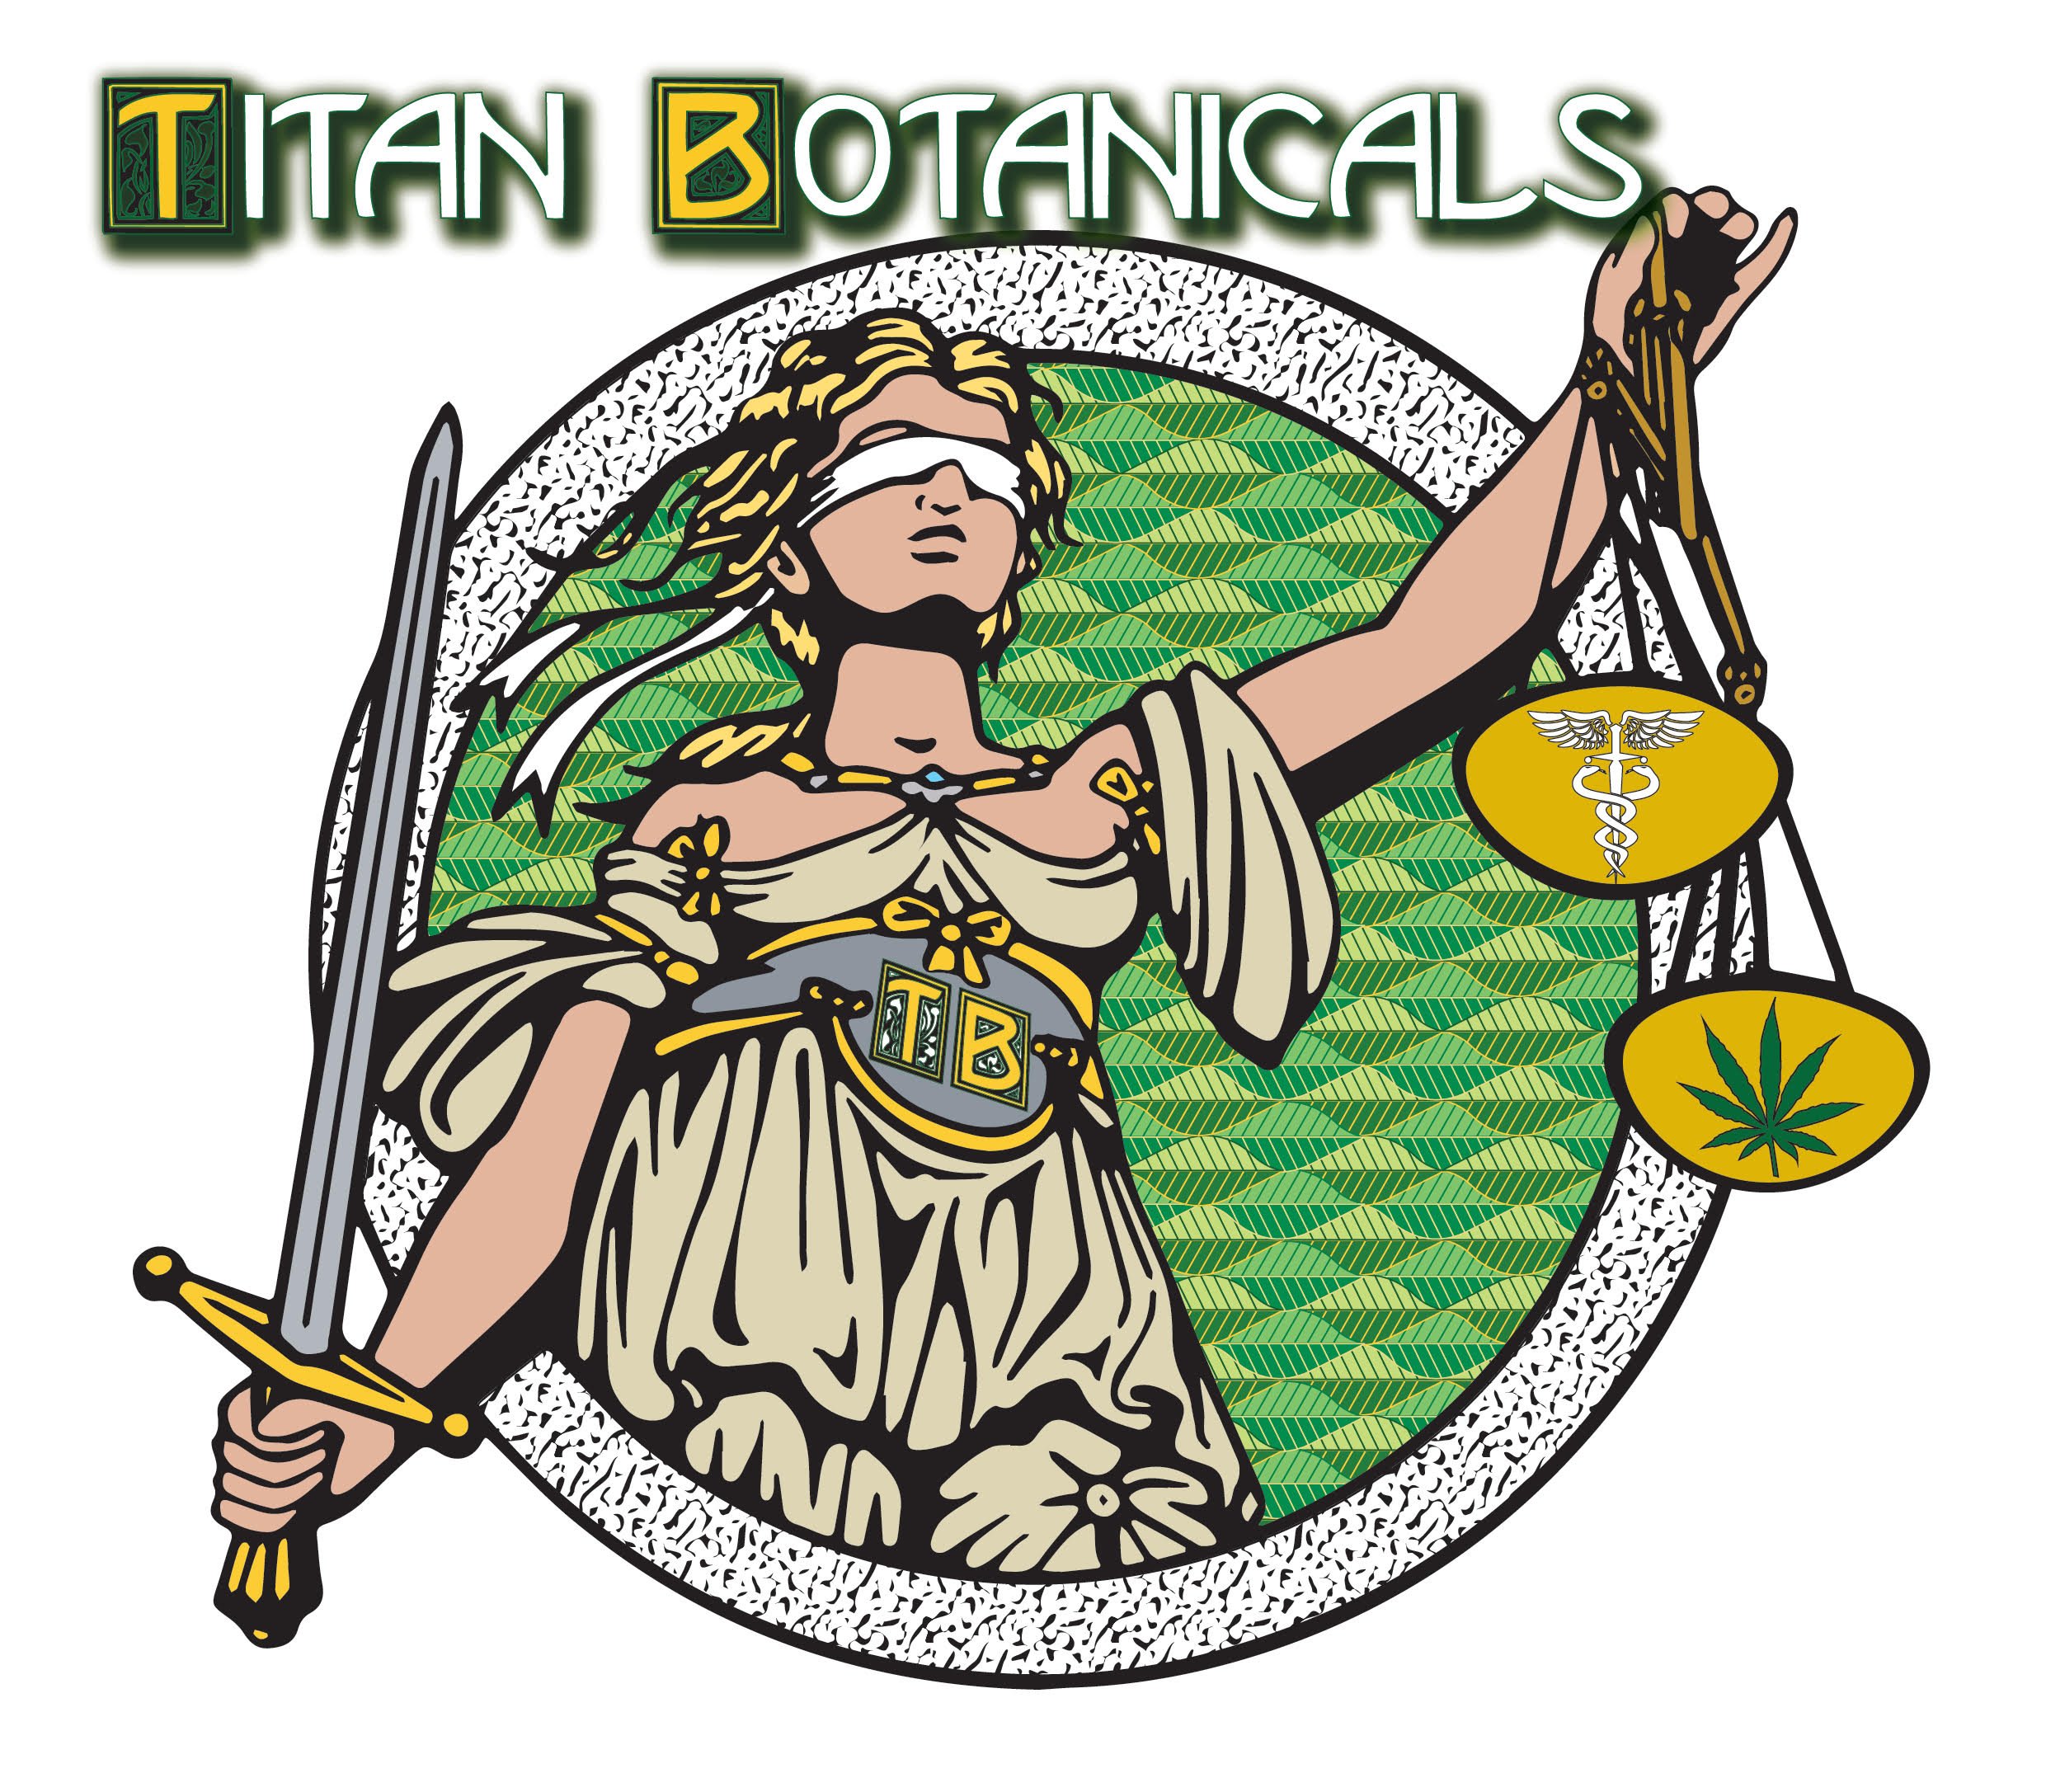 Titan Botanicals